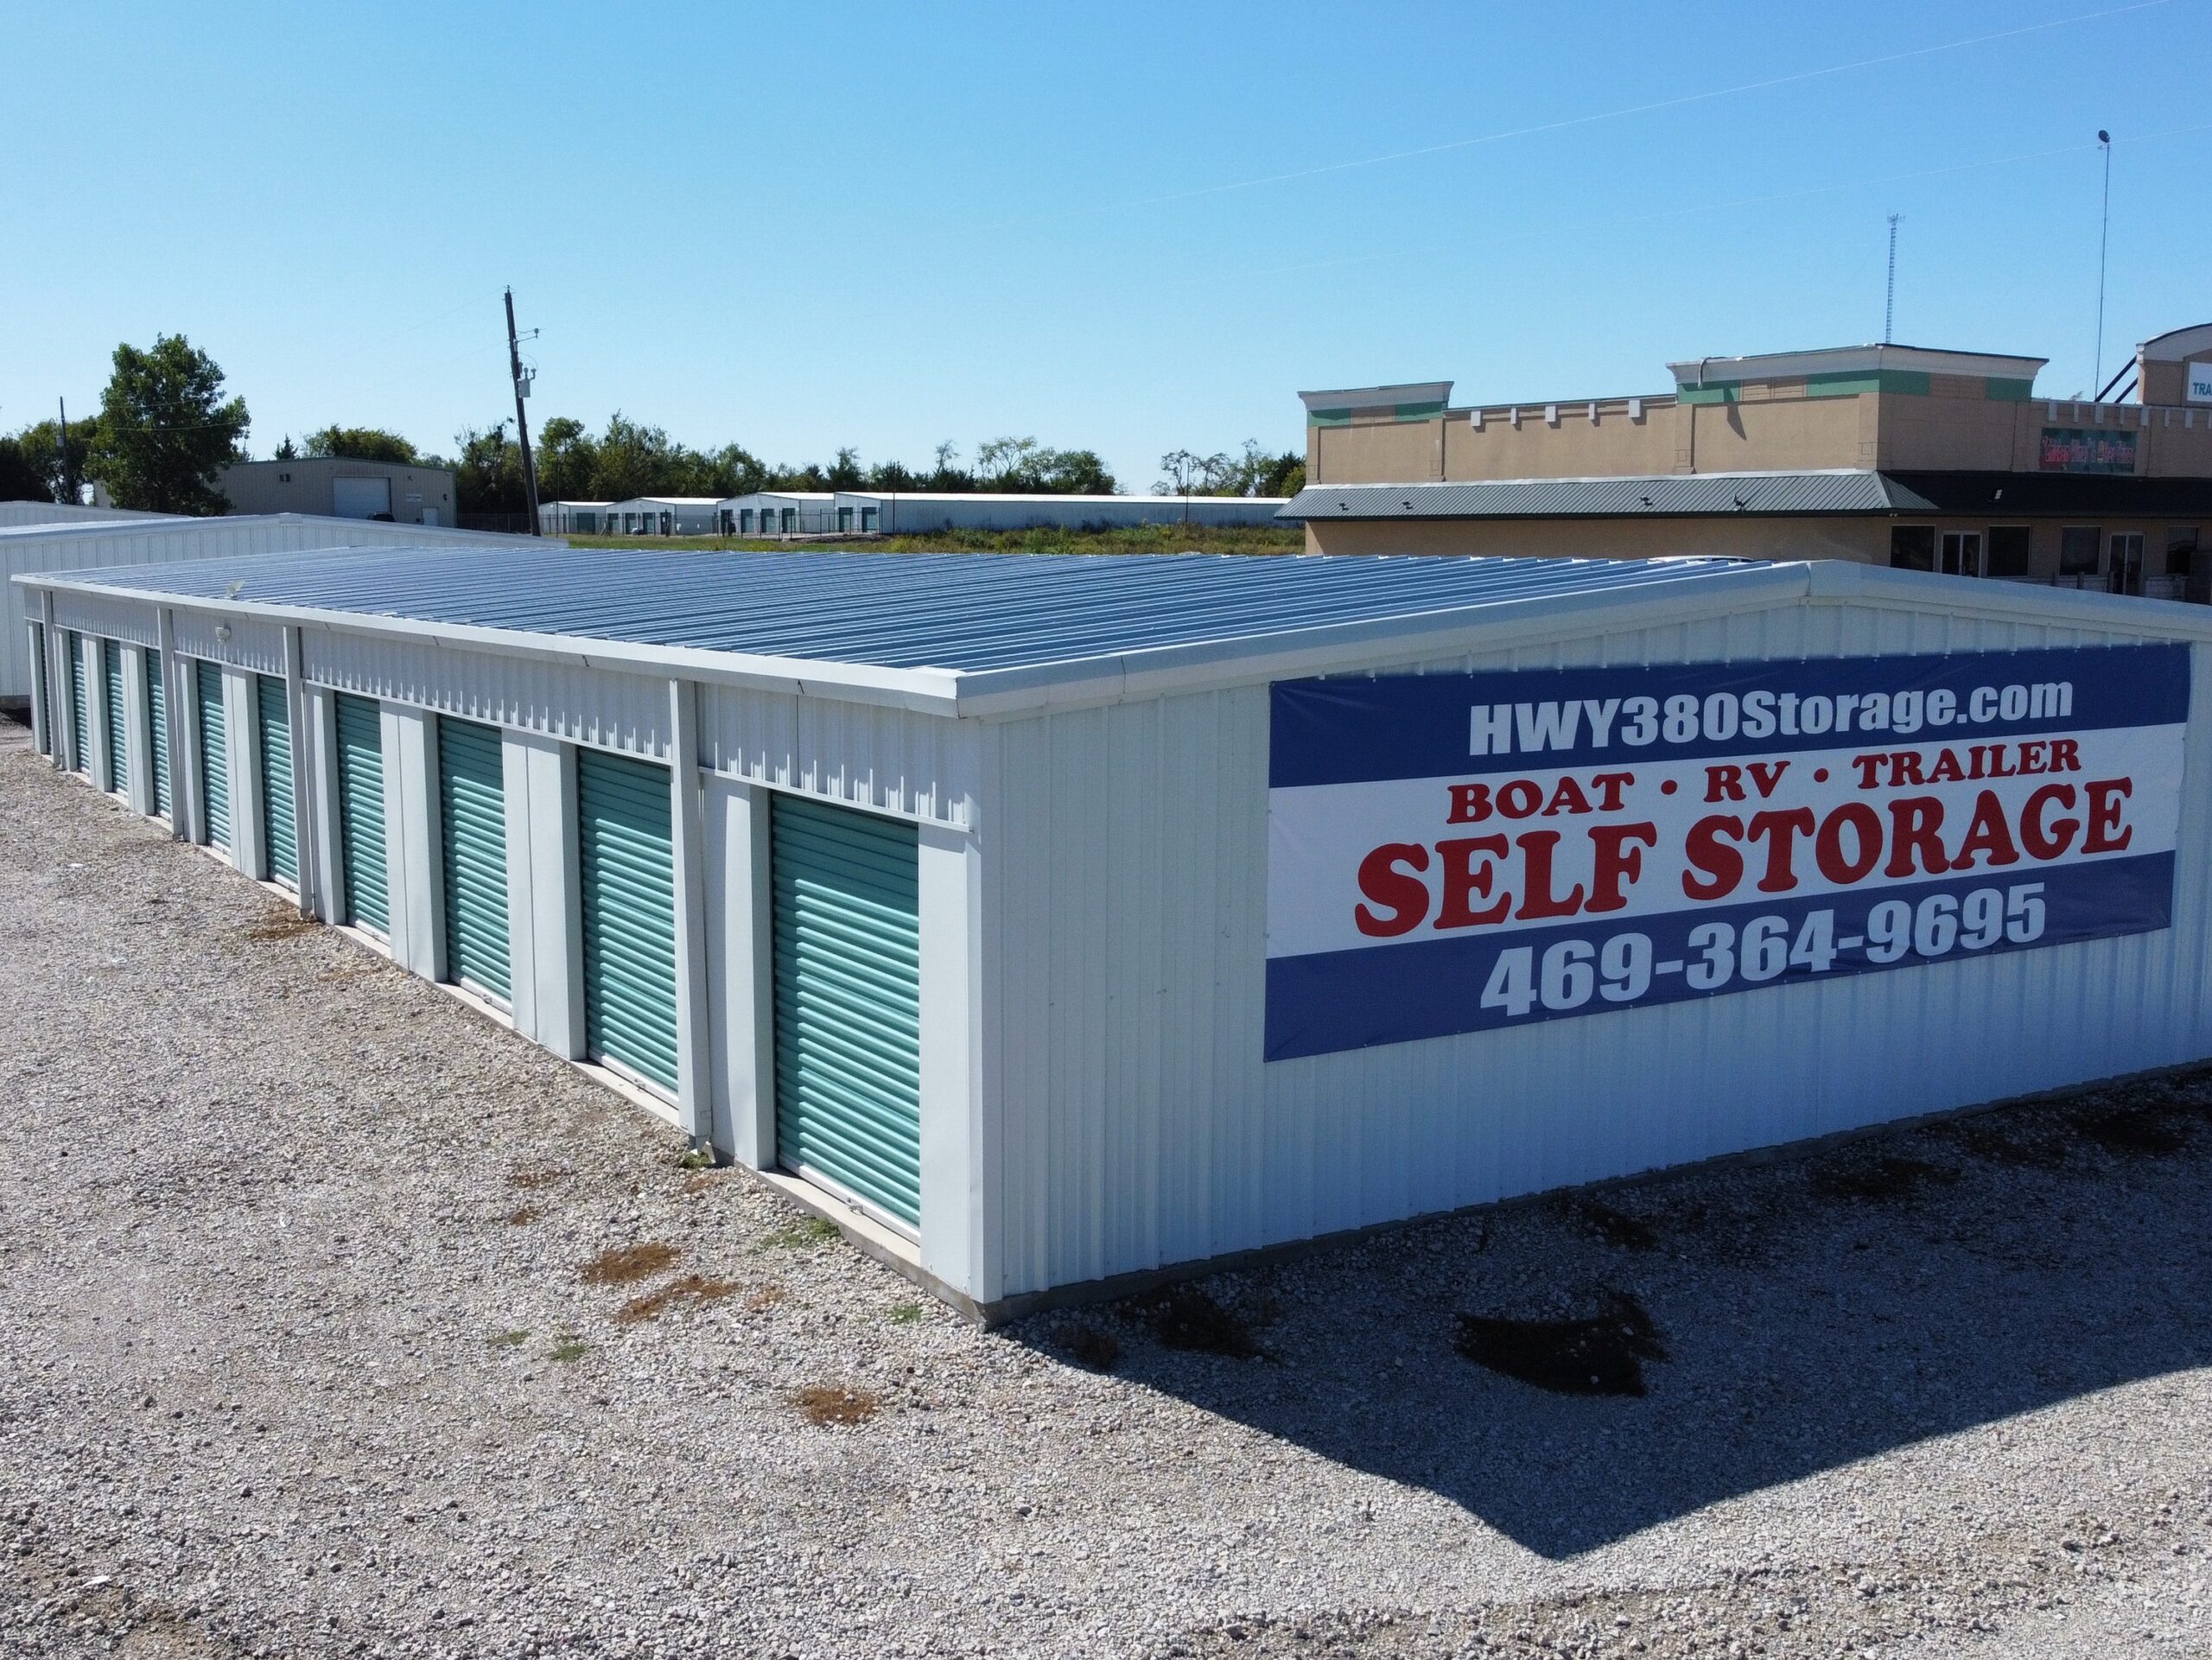 Hwy 380 Self Storage - Self Storage Facility For Sale by The Karr Self Storage Team